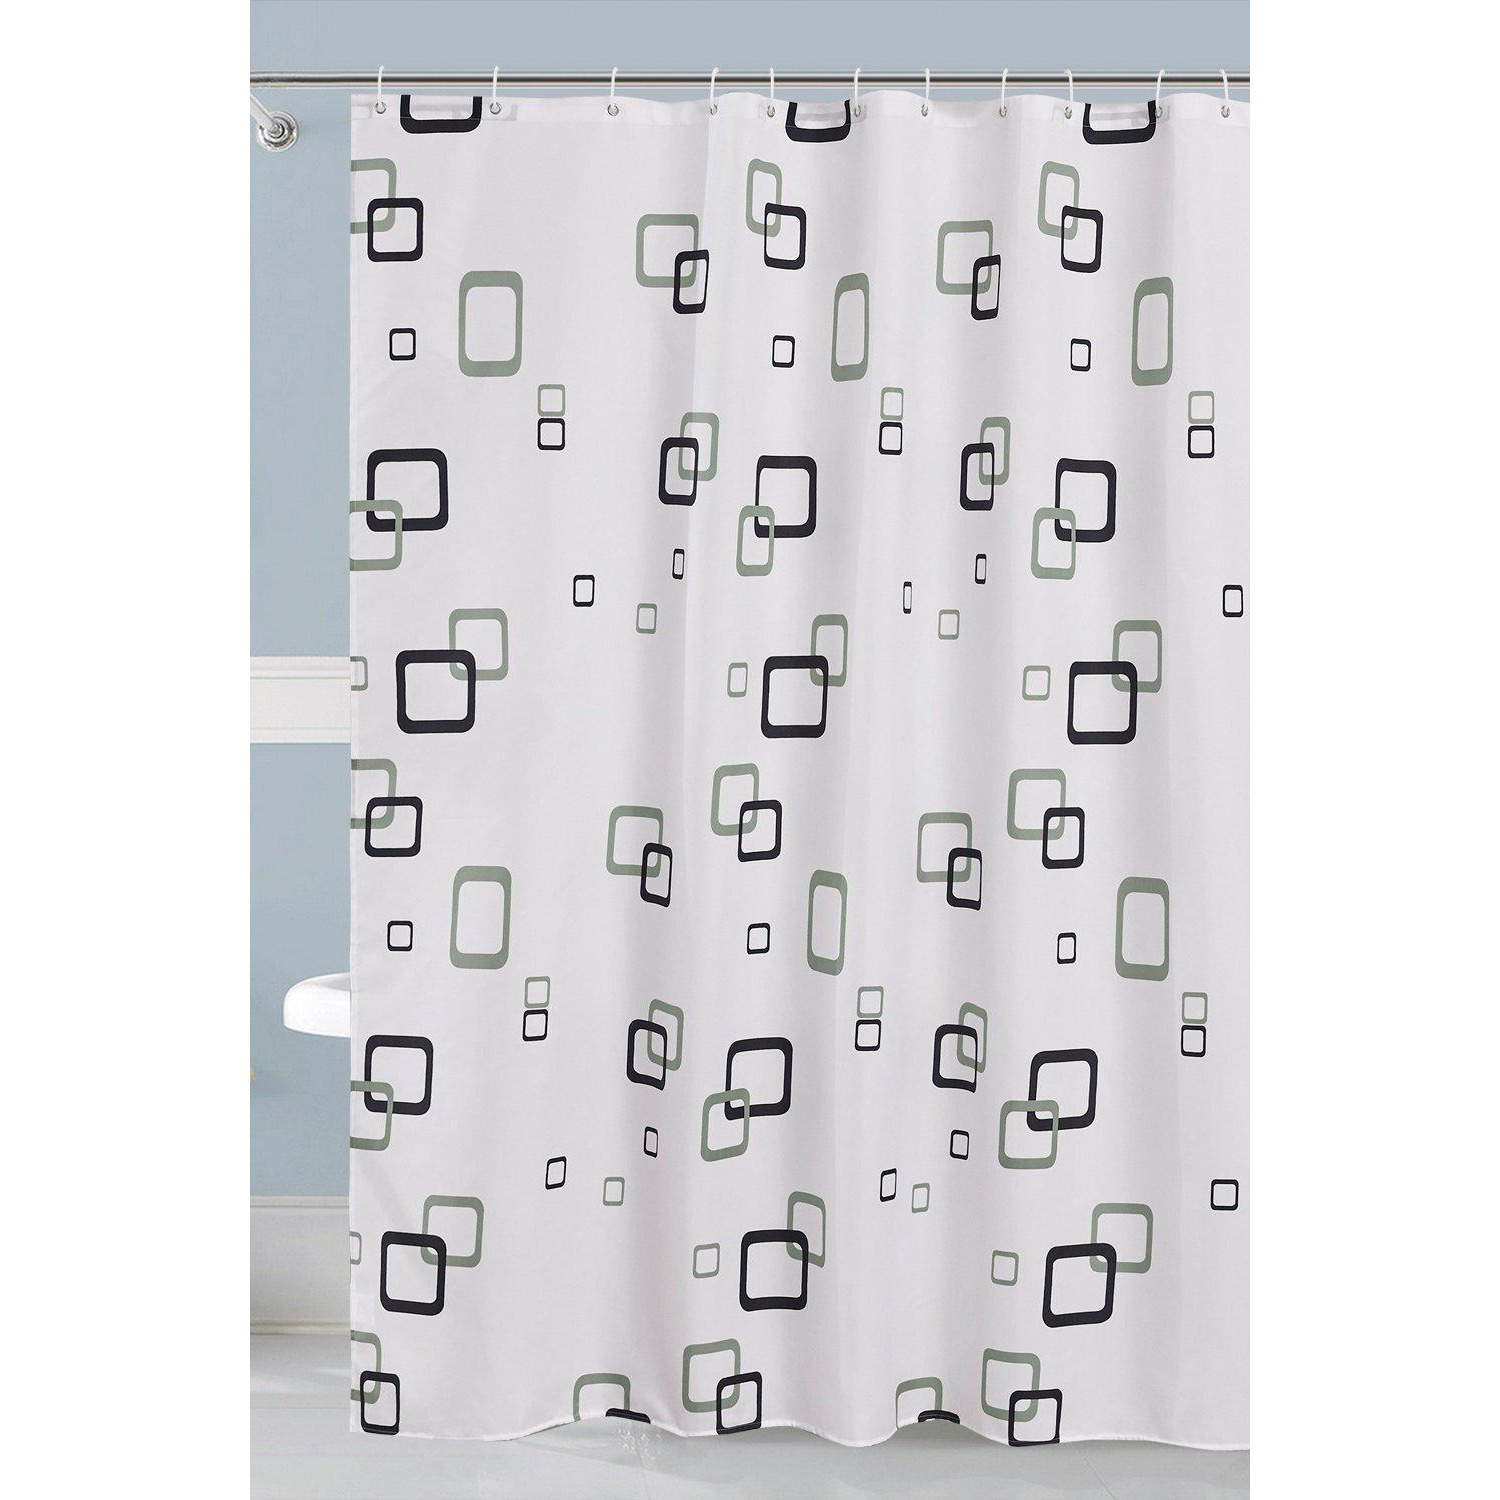 Grey & Black Square Design Shower Curtain - 180cm x 200cm - image 1